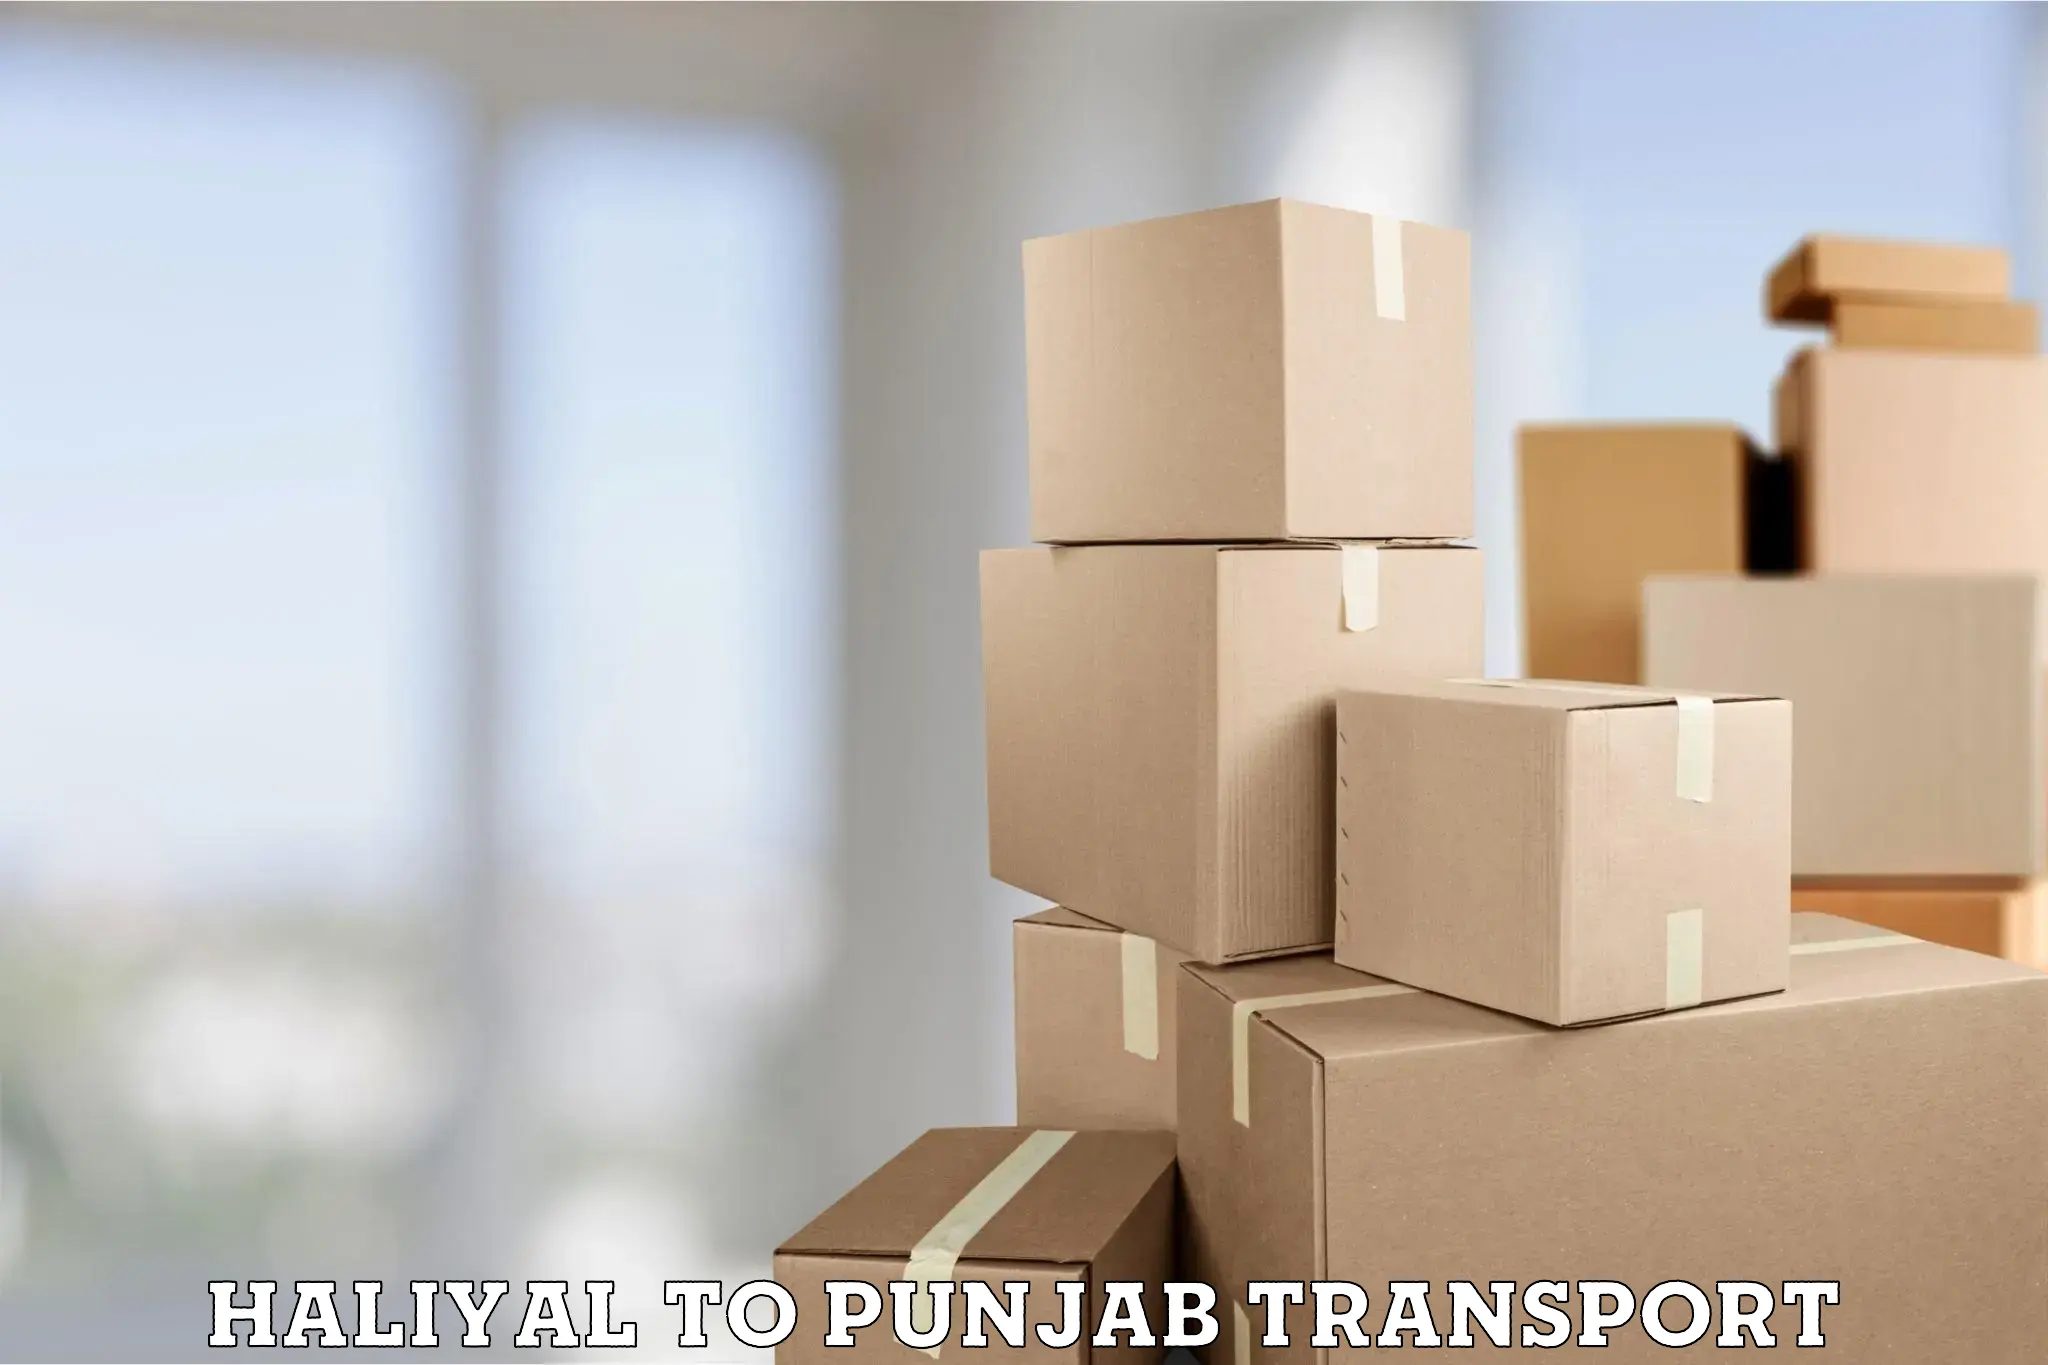 Delivery service Haliyal to Punjab